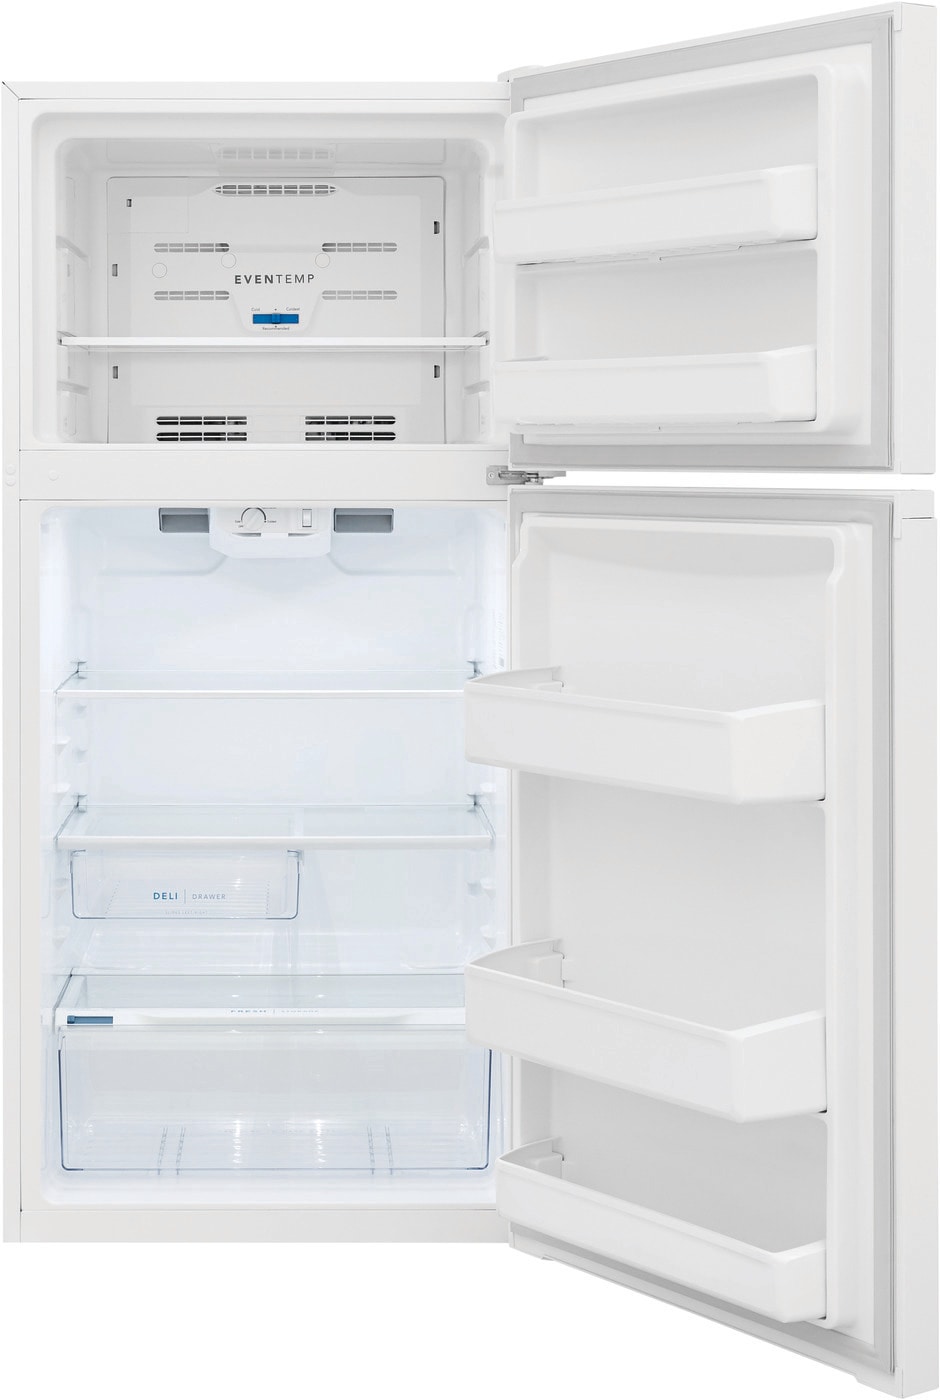 Frigidaire 13.9 Cu. Ft. Top Freezer Refrigerator - image 2 of 5